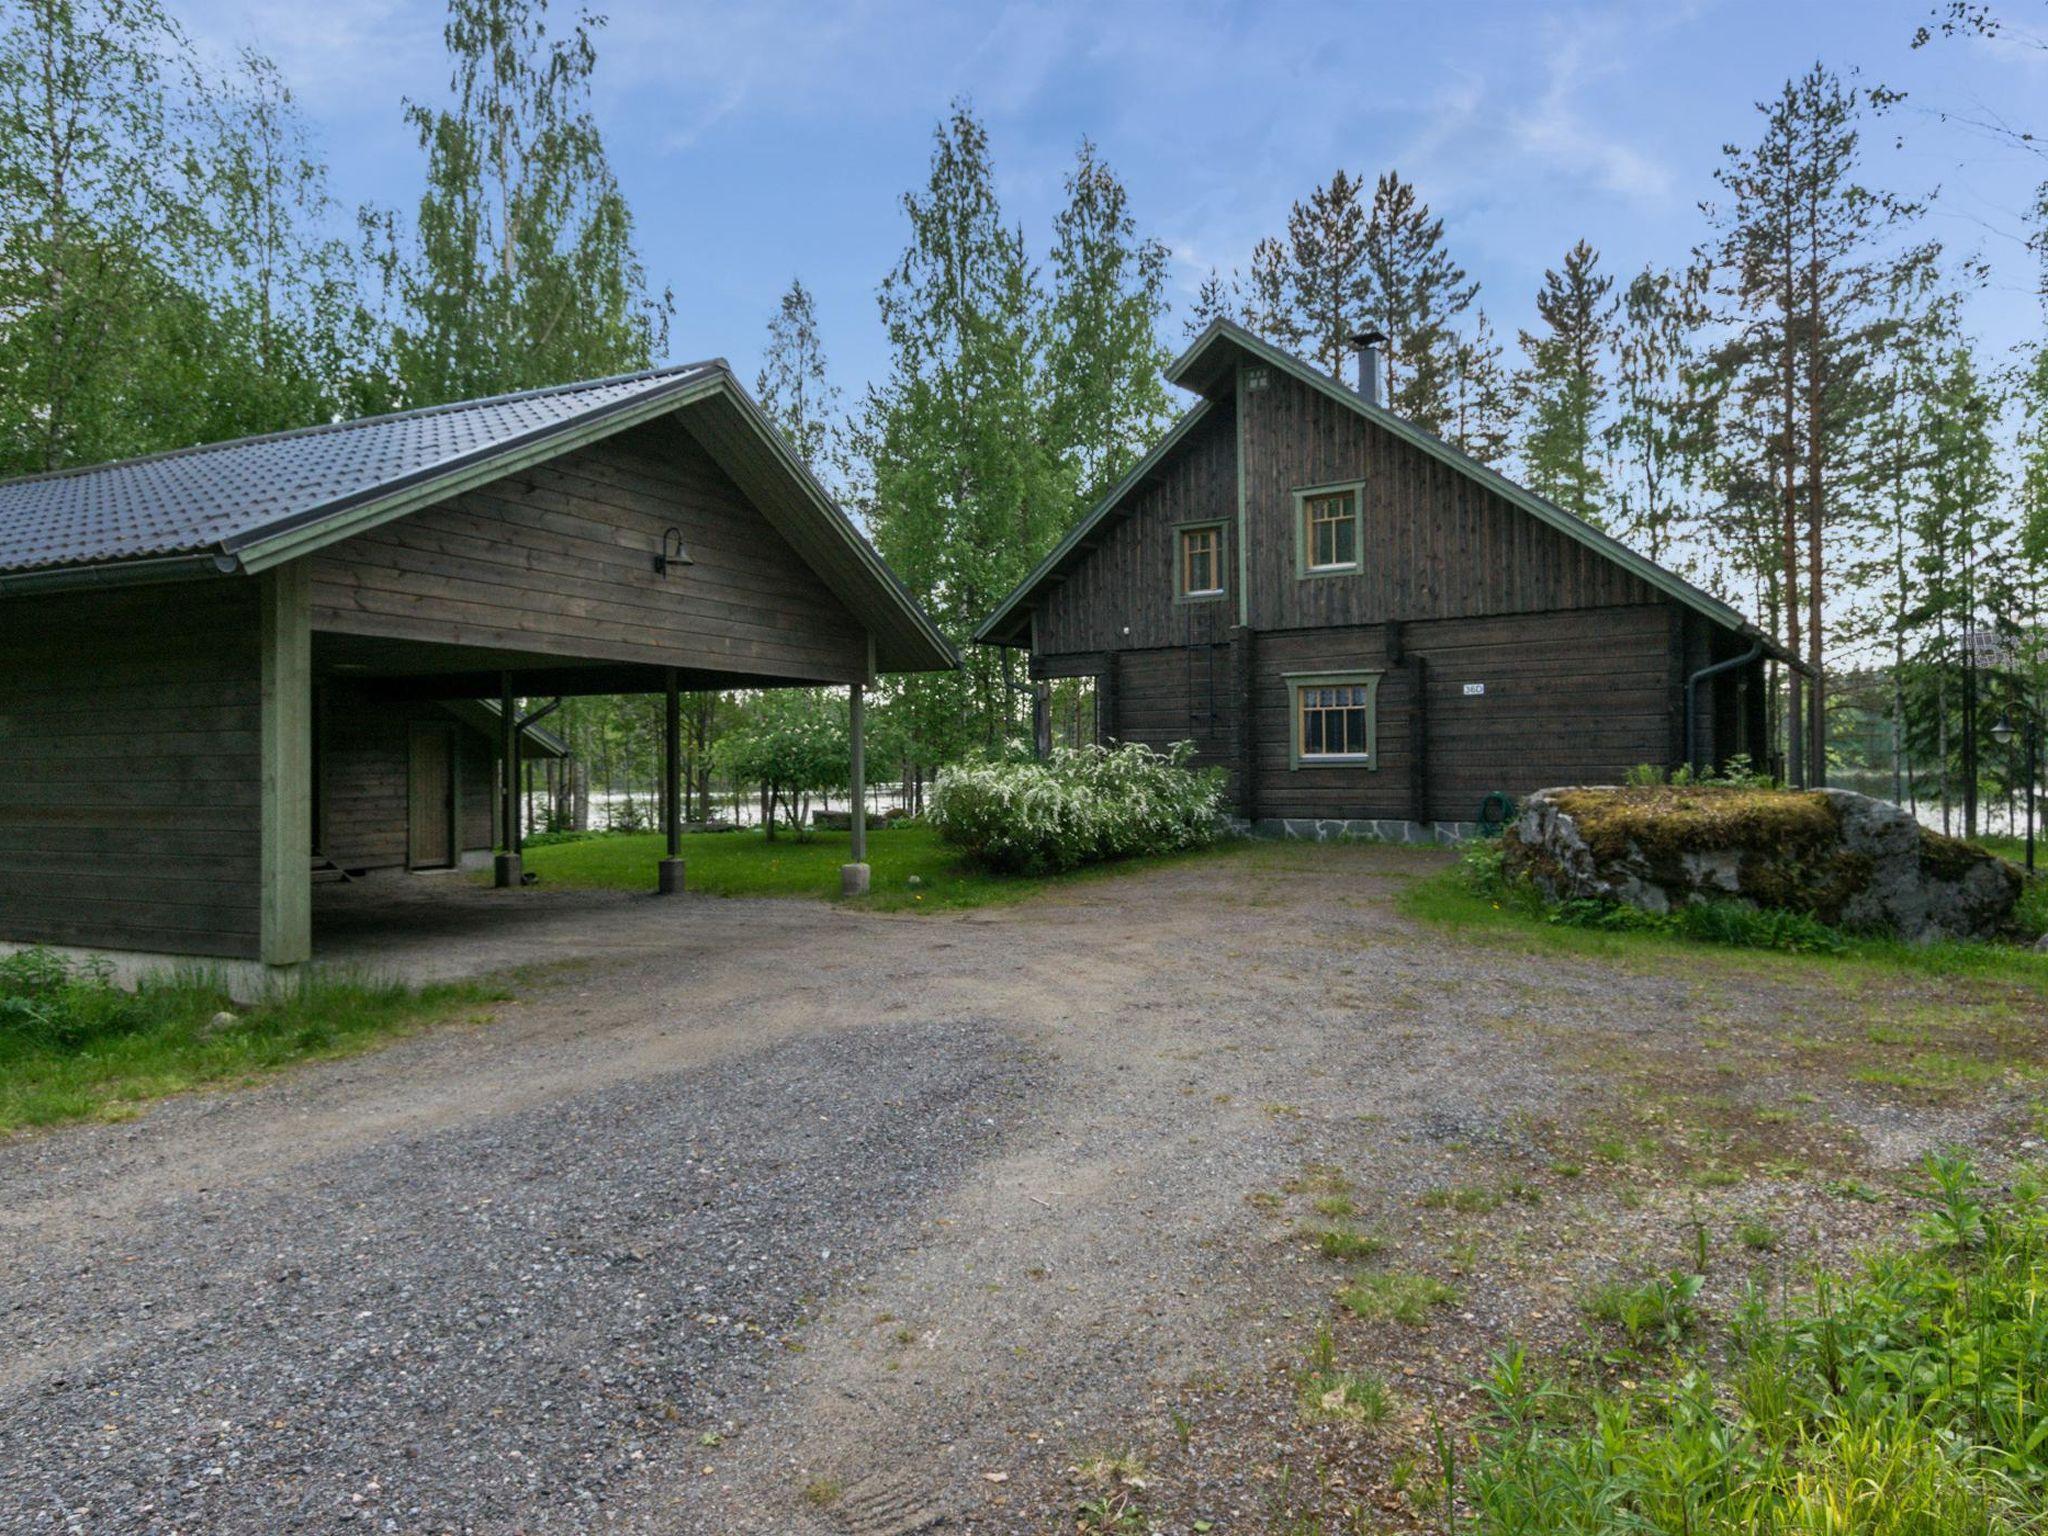 Photo 1 - 3 bedroom House in Mikkeli with sauna